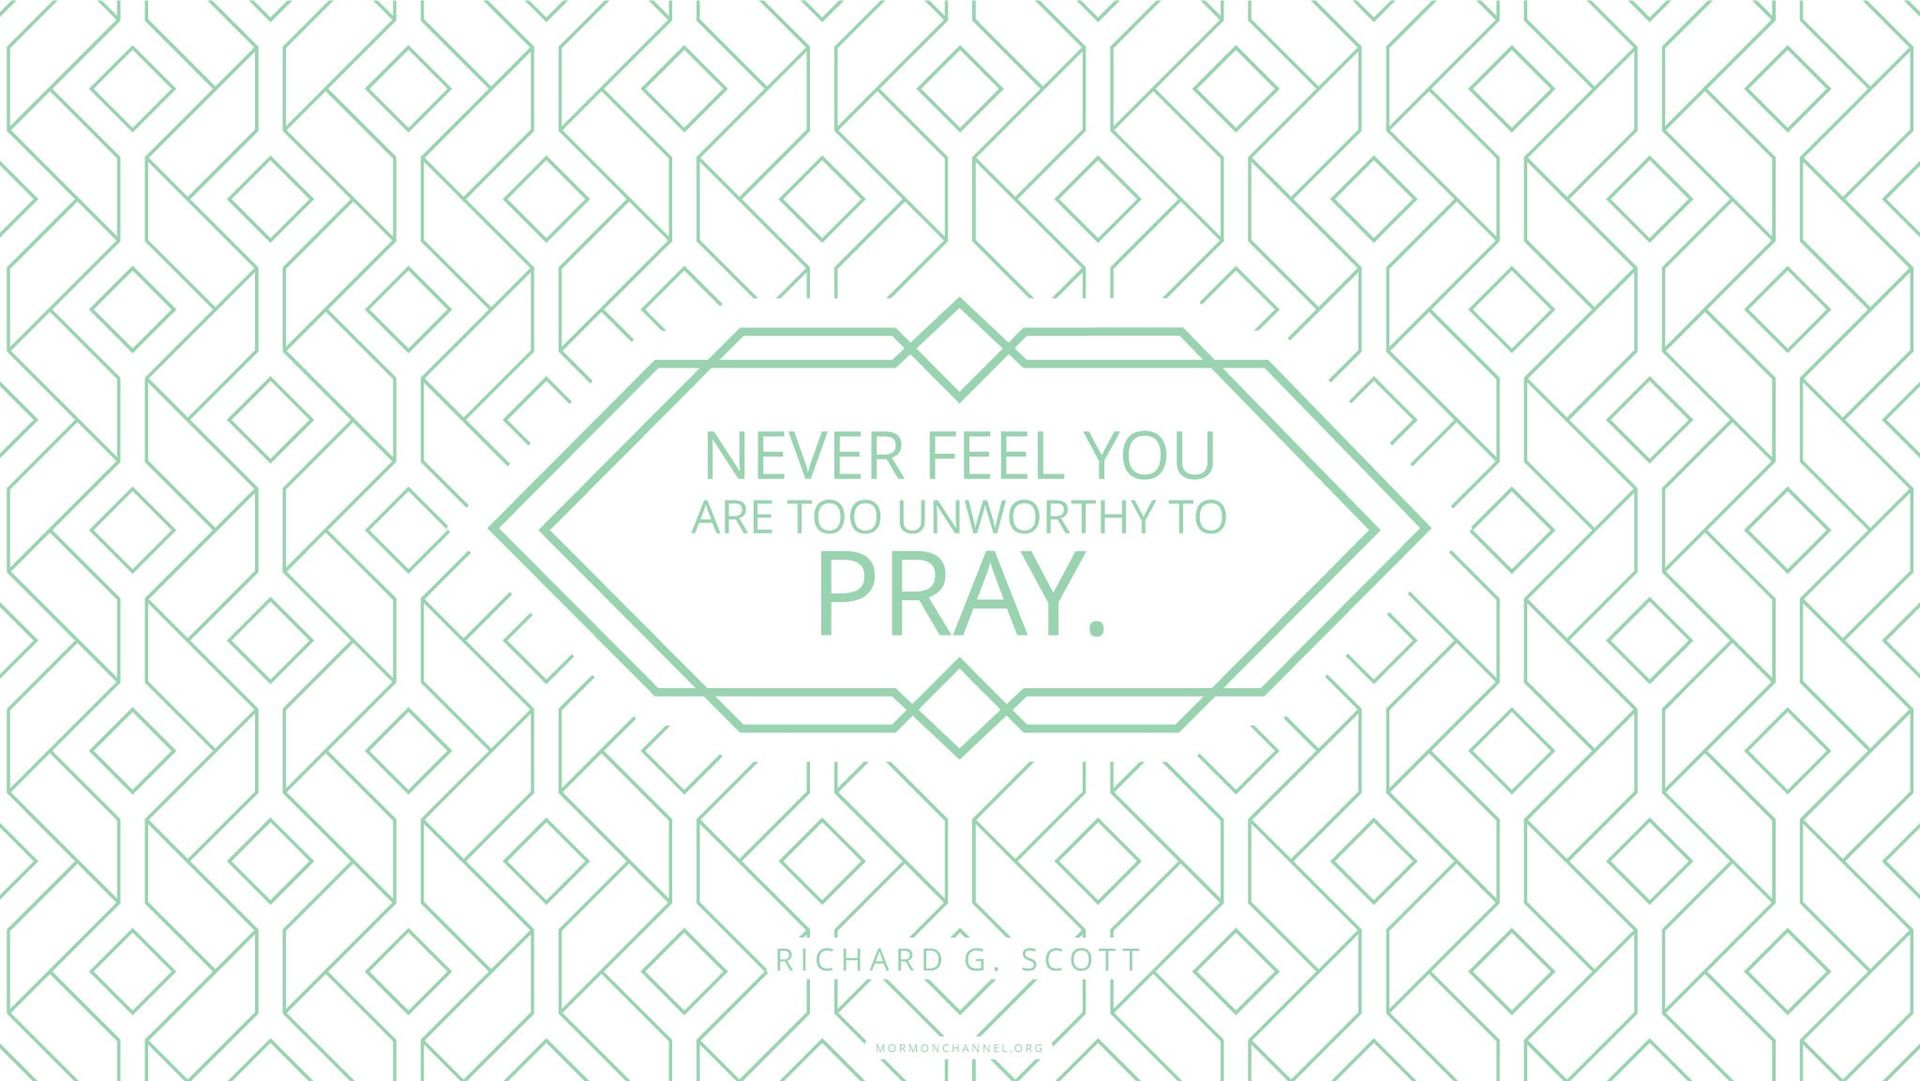 “Never feel you are too unworthy to pray.”—Elder Richard G. Scott, “Using the Supernal Gift of Prayer”